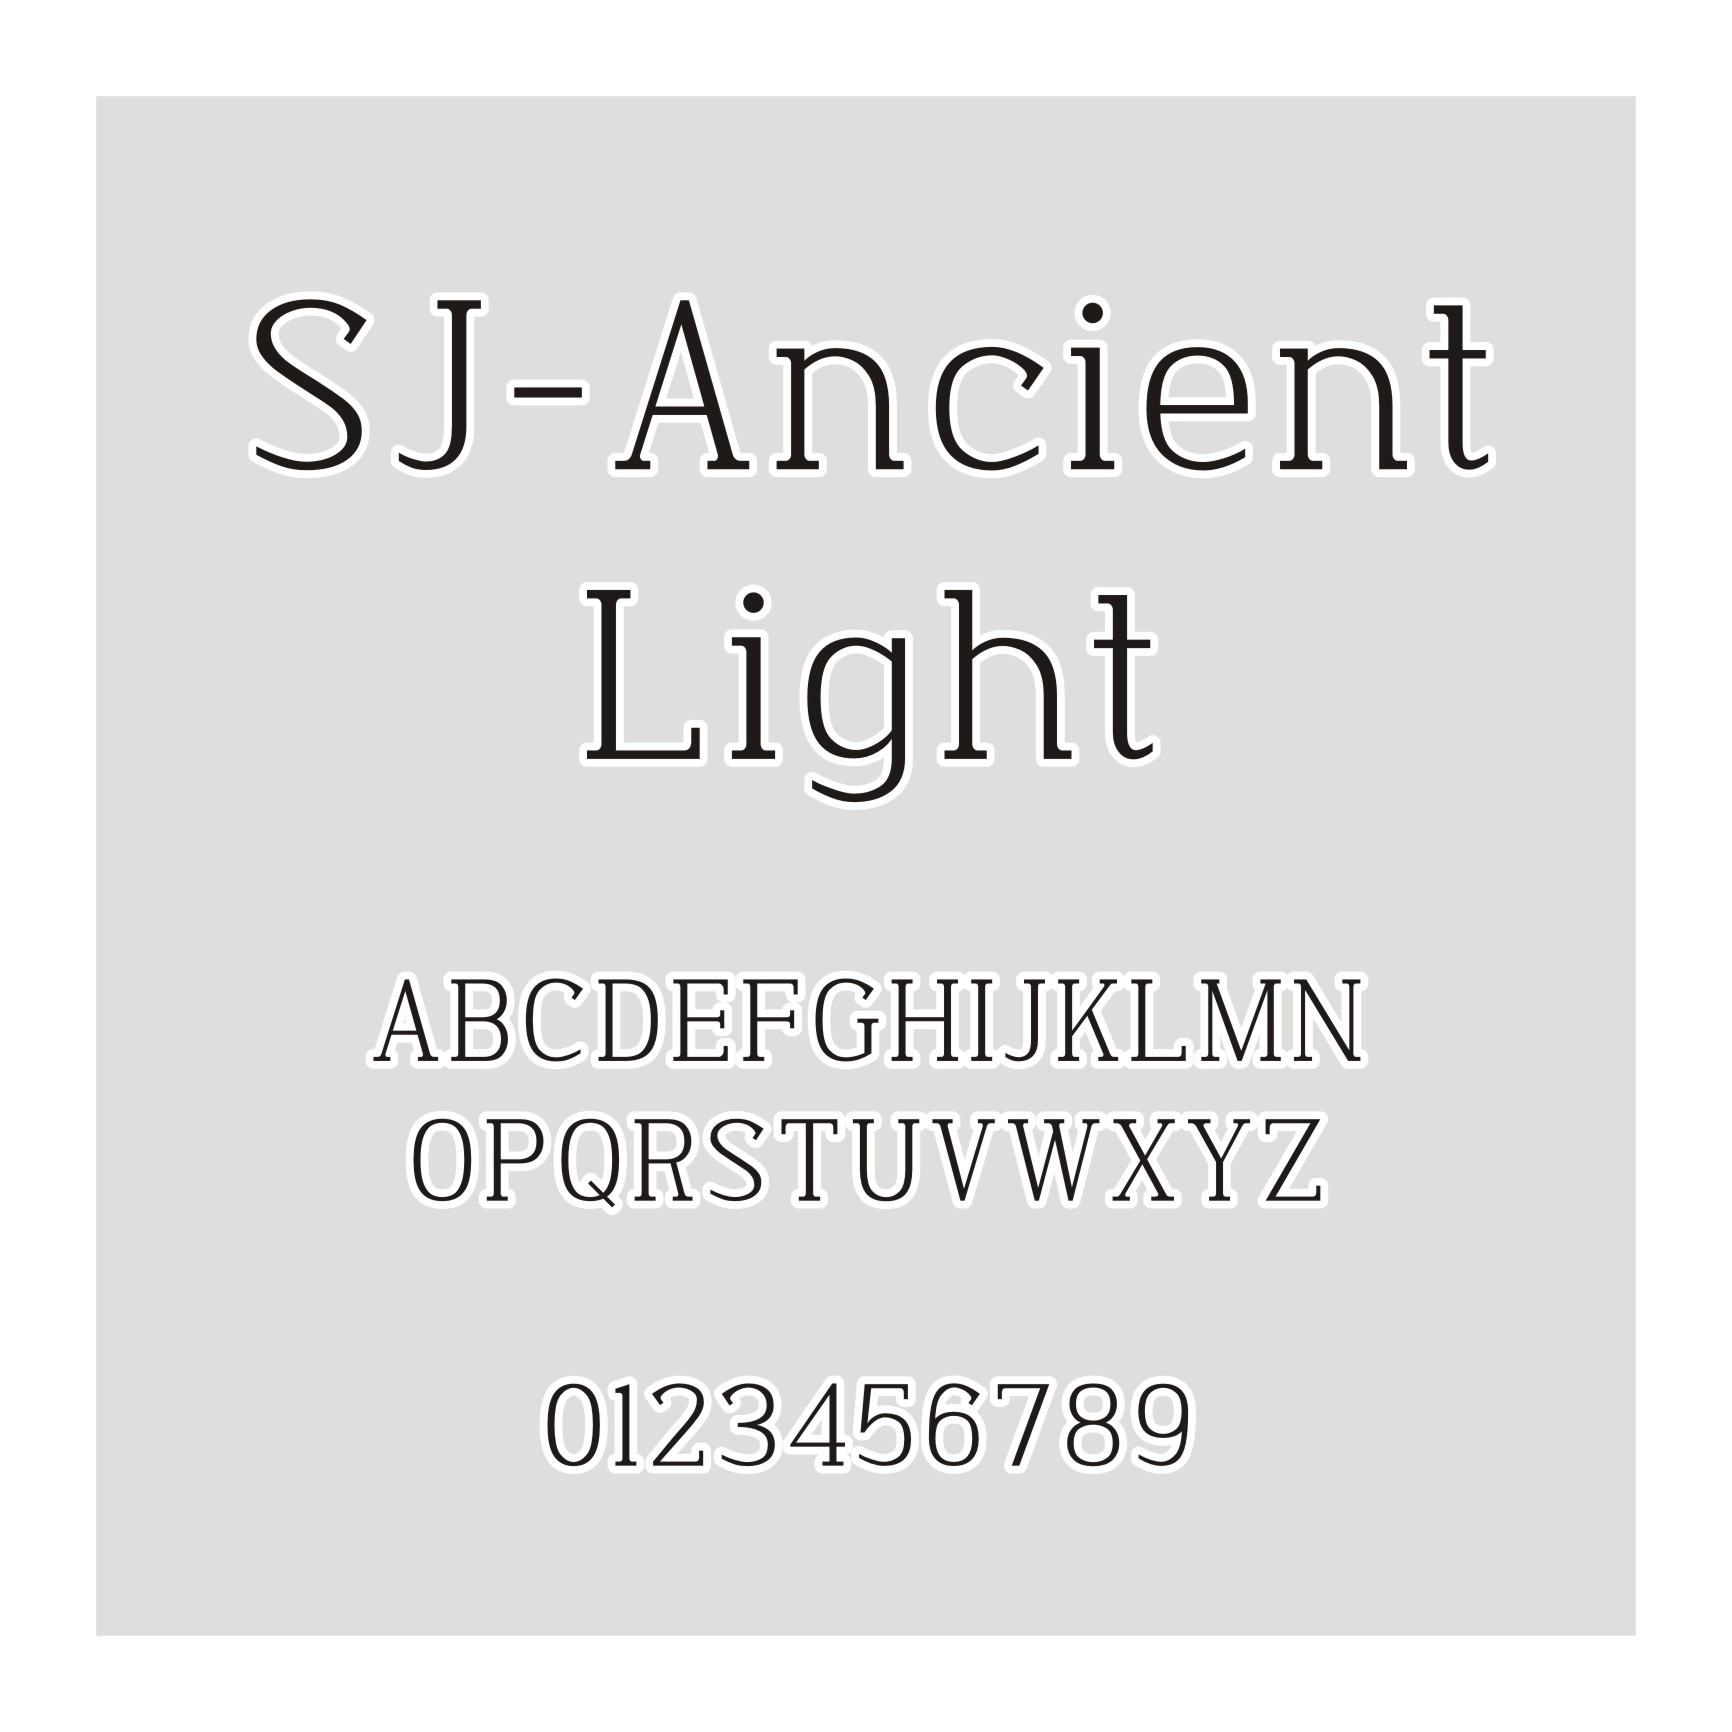 SJ-Ancient Light